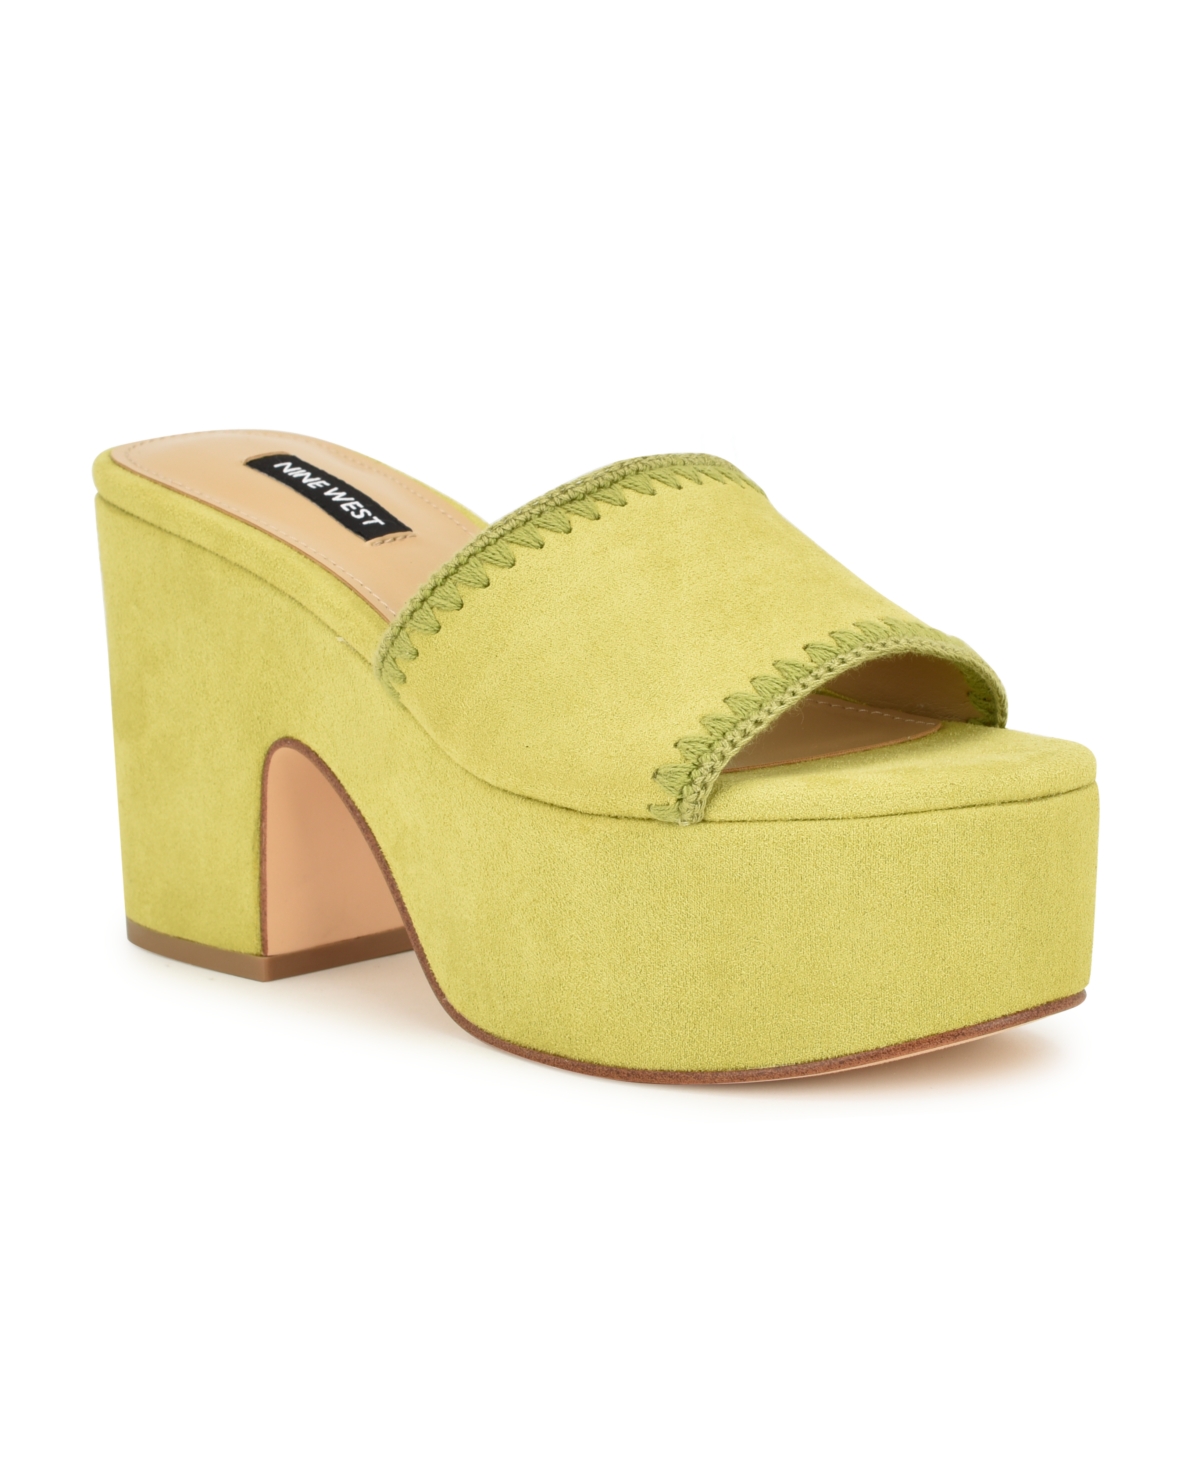 Women's Yickie Slip-on Round Toe Wedge Sandals - Green